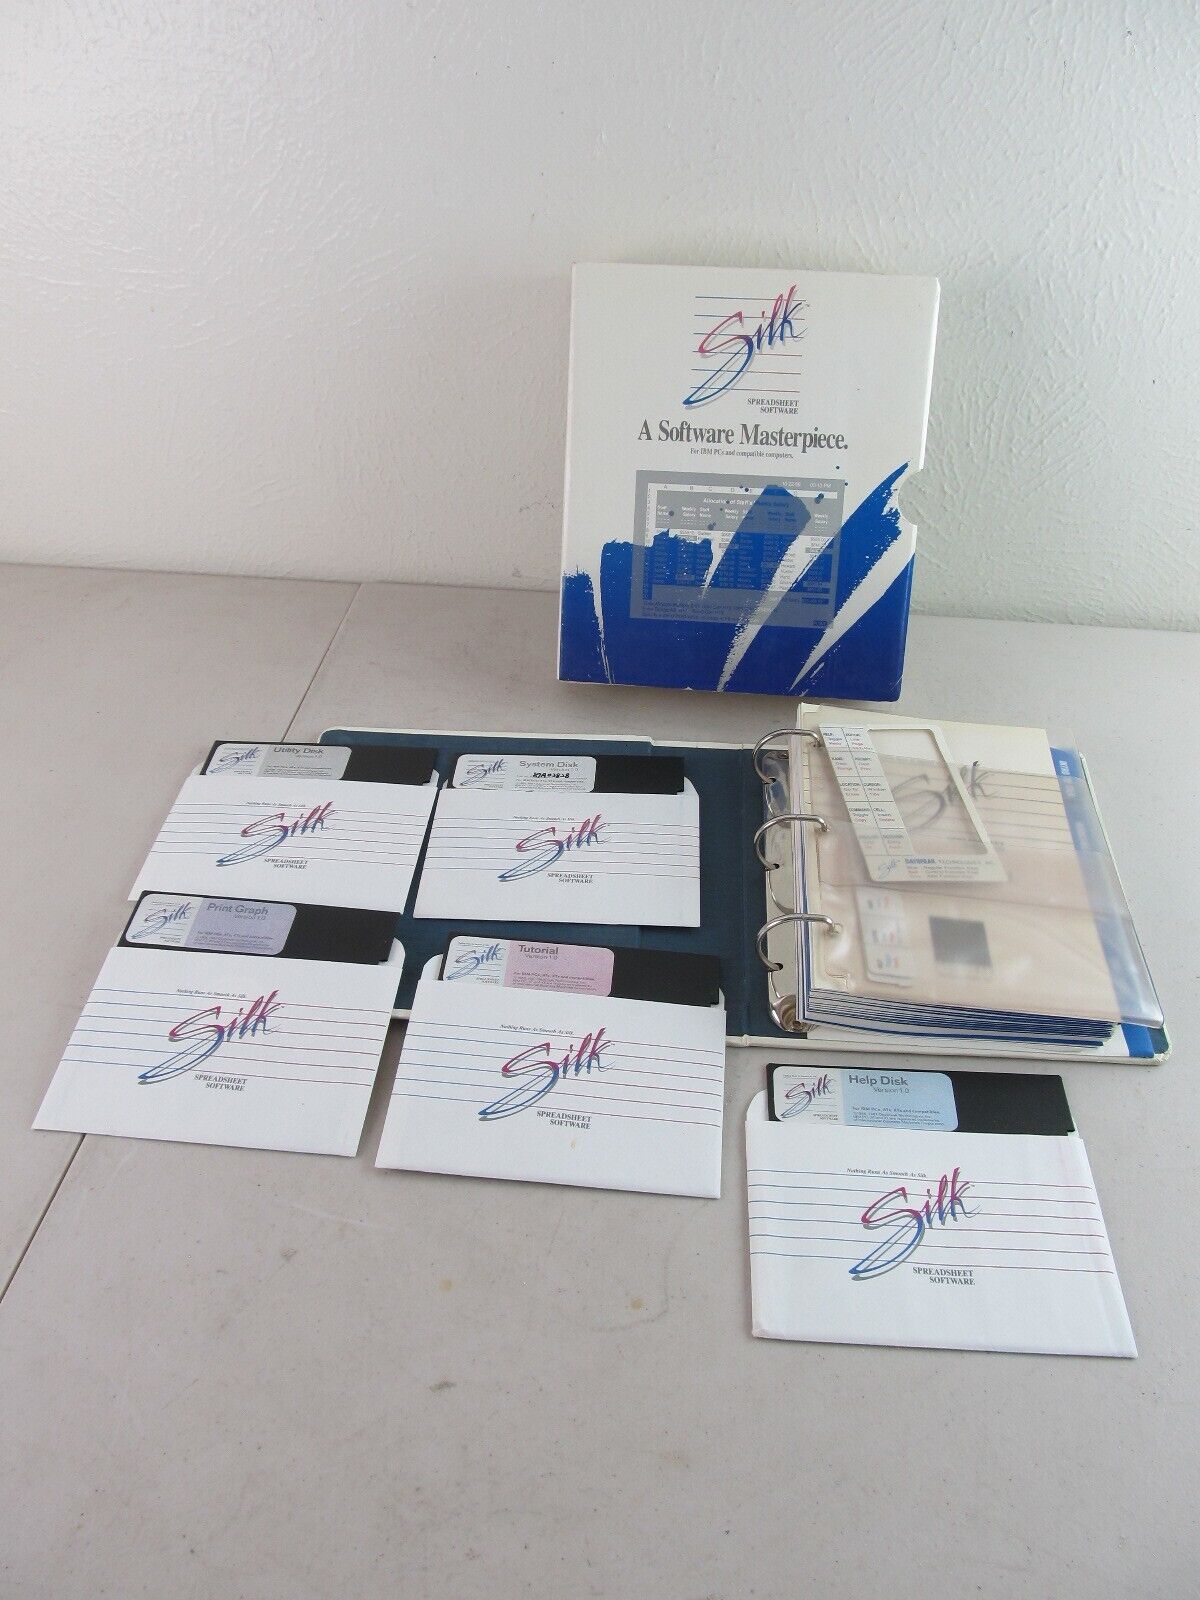 VINTAGE Silk Spreadsheet Software Floppy Disks IBM PC 1987 by Daybreak Tech.